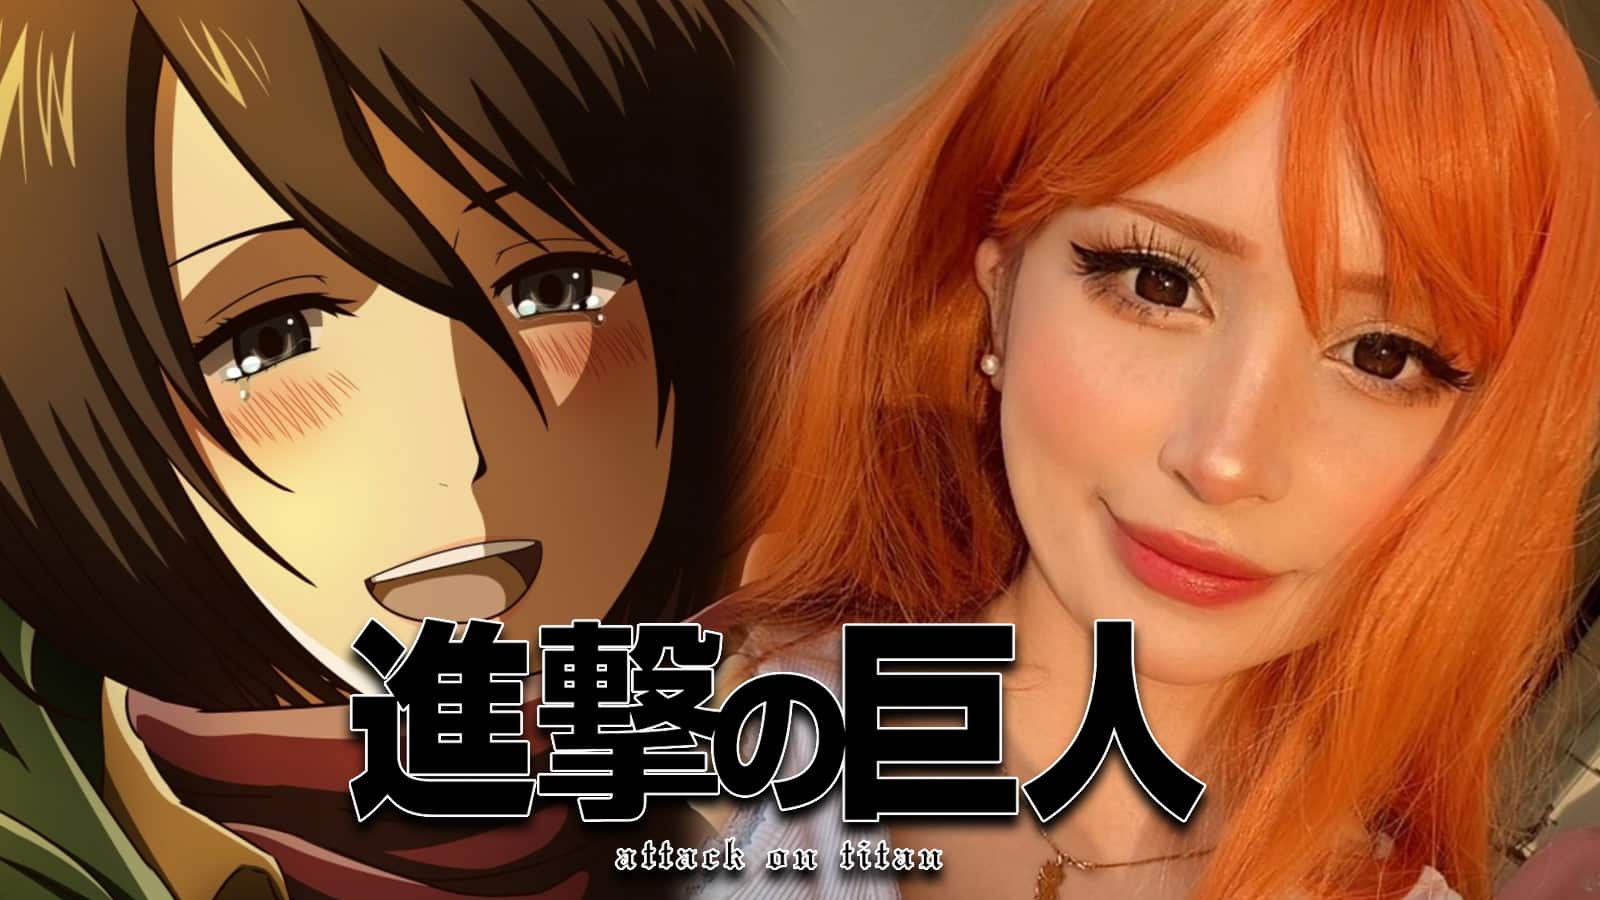 Screenshot of Mikasa Ackerman from Attack on Titan anime next to cosplayer.